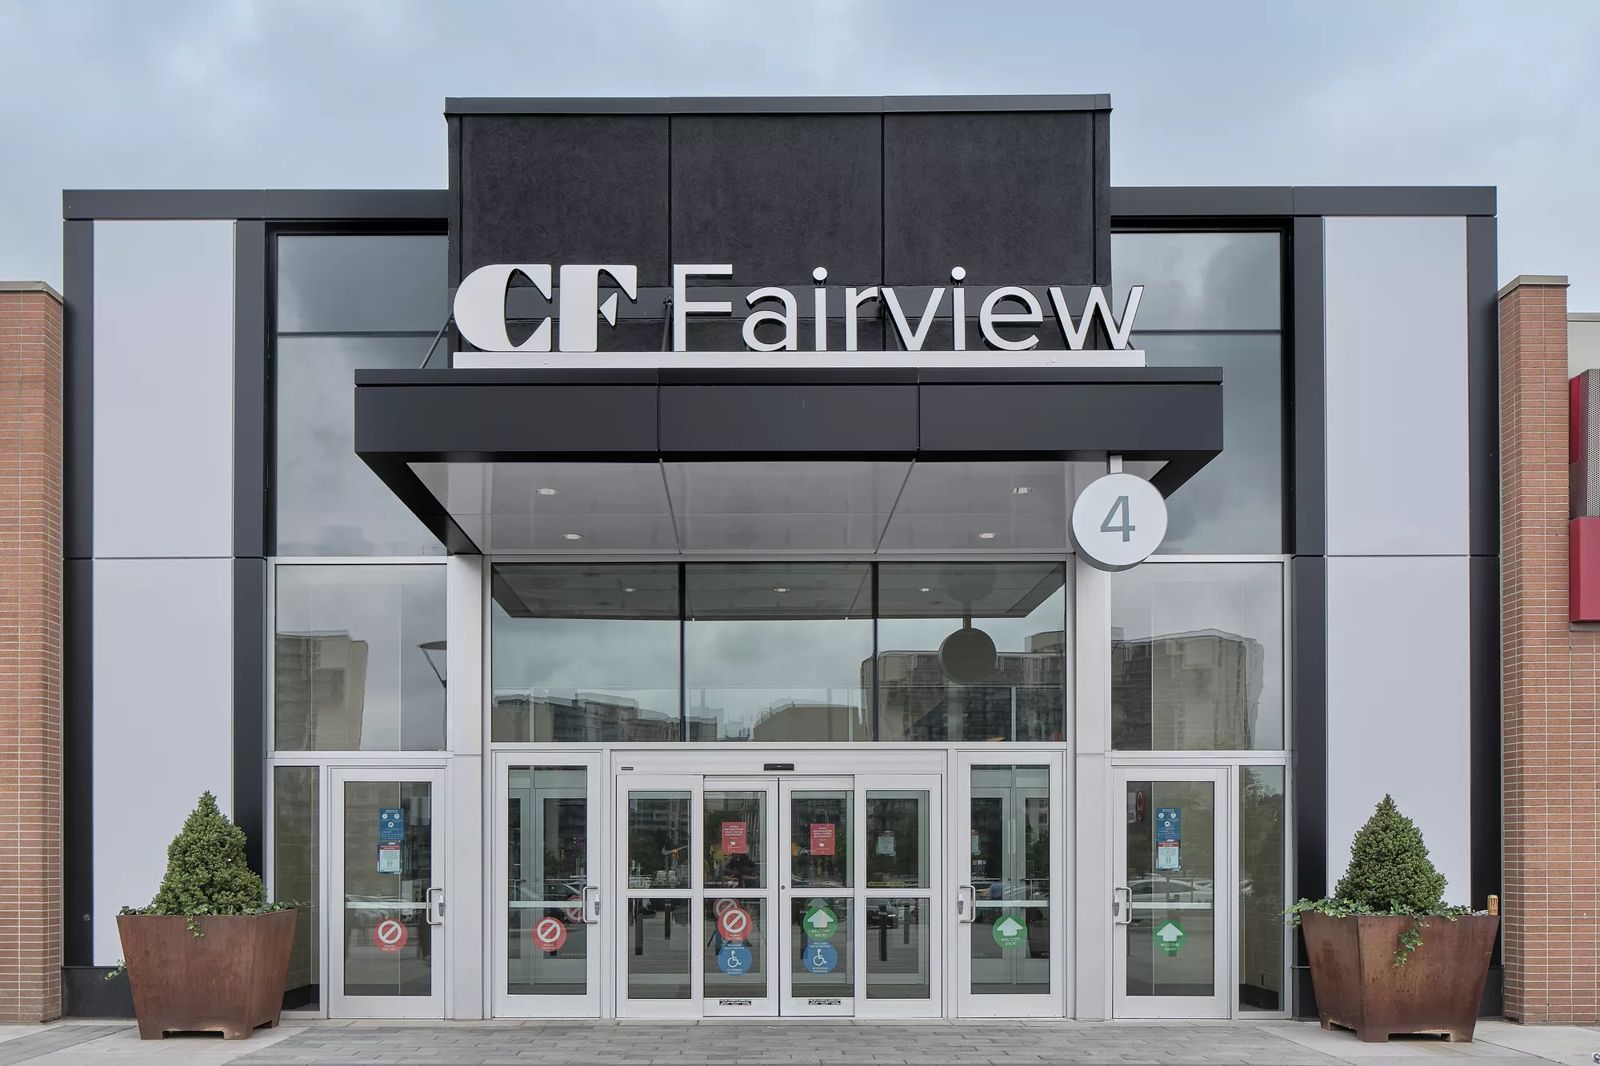 CF Fairview Mall - Mall Exterior 